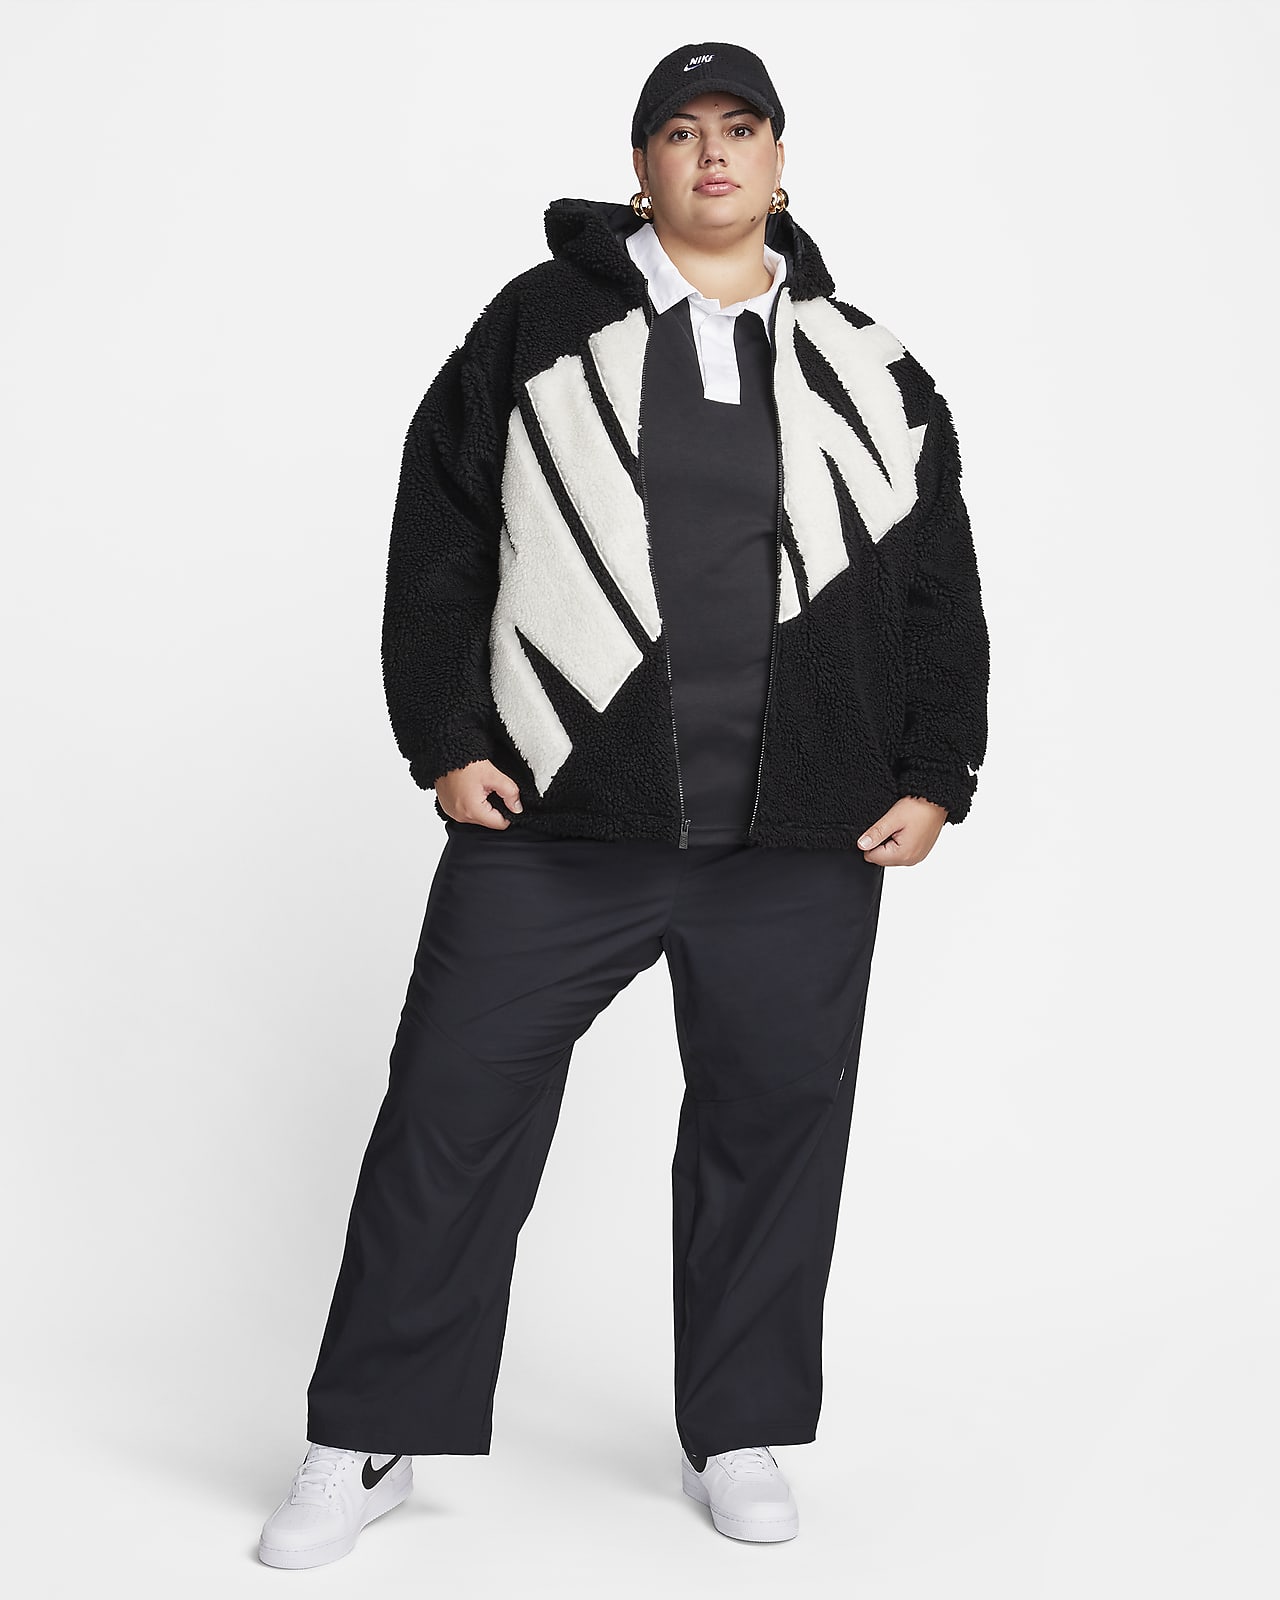 Nike Sportswear Womens Woven Jacket Black White Stripe Plus Size 1X